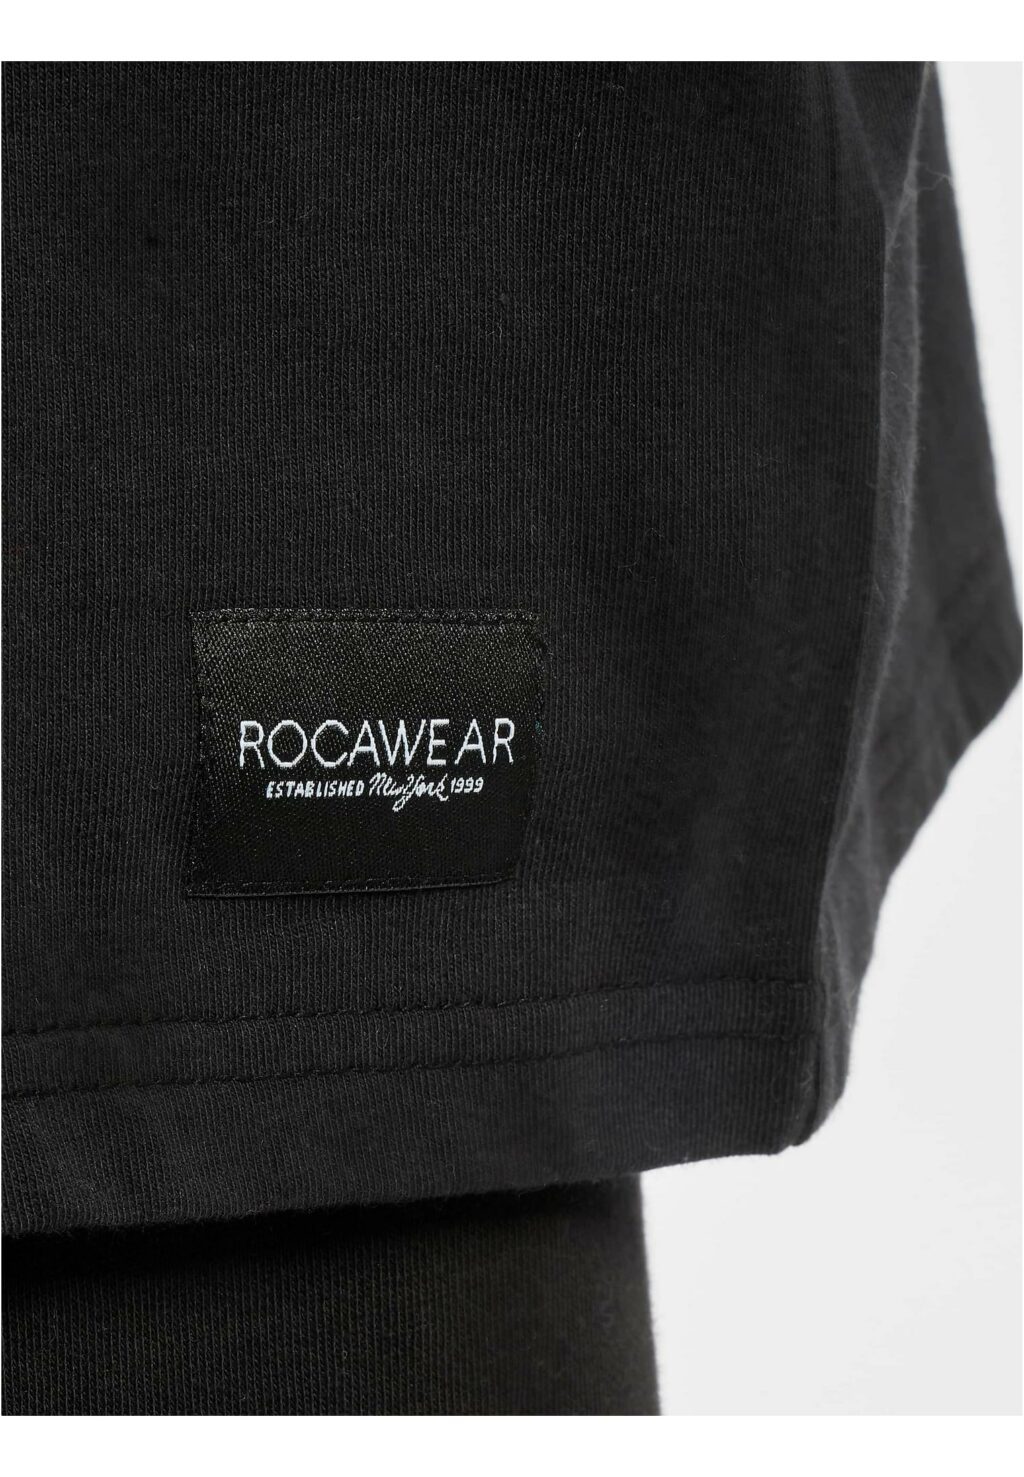 Rocawear Woodhaven T-Shirt black RWTS078